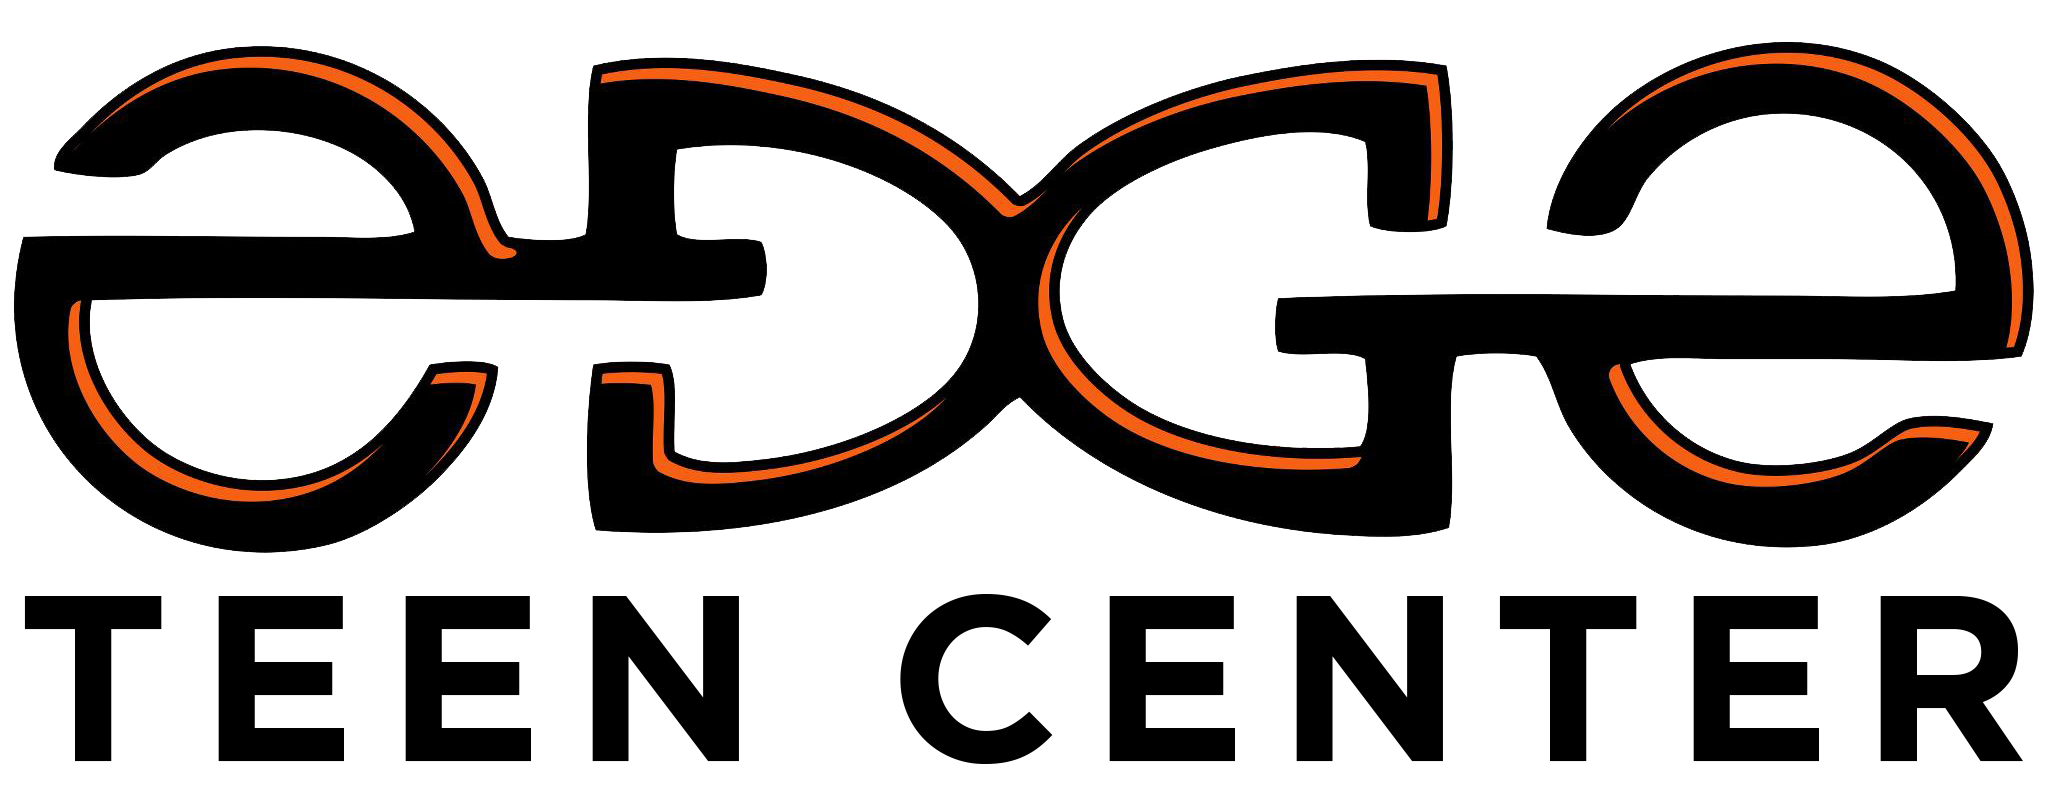 EDGE-logo.png